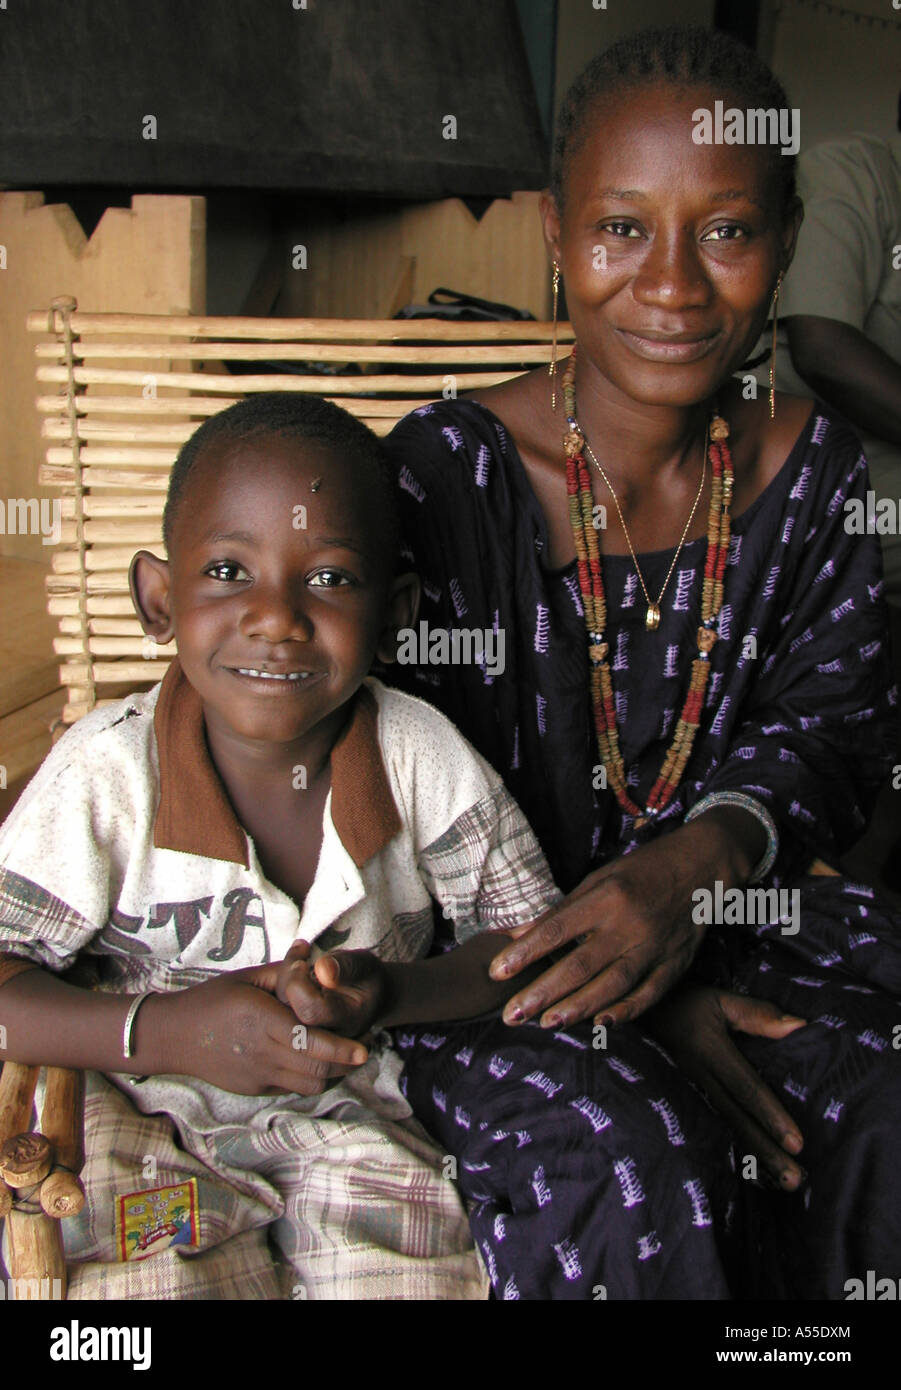 Painet ik0343 Burkina Faso 35oldold Pauline Hiv Sohn Fatahou vie Positif Aids Support Gruppe Ouagadougou Land entwickelt Stockfoto